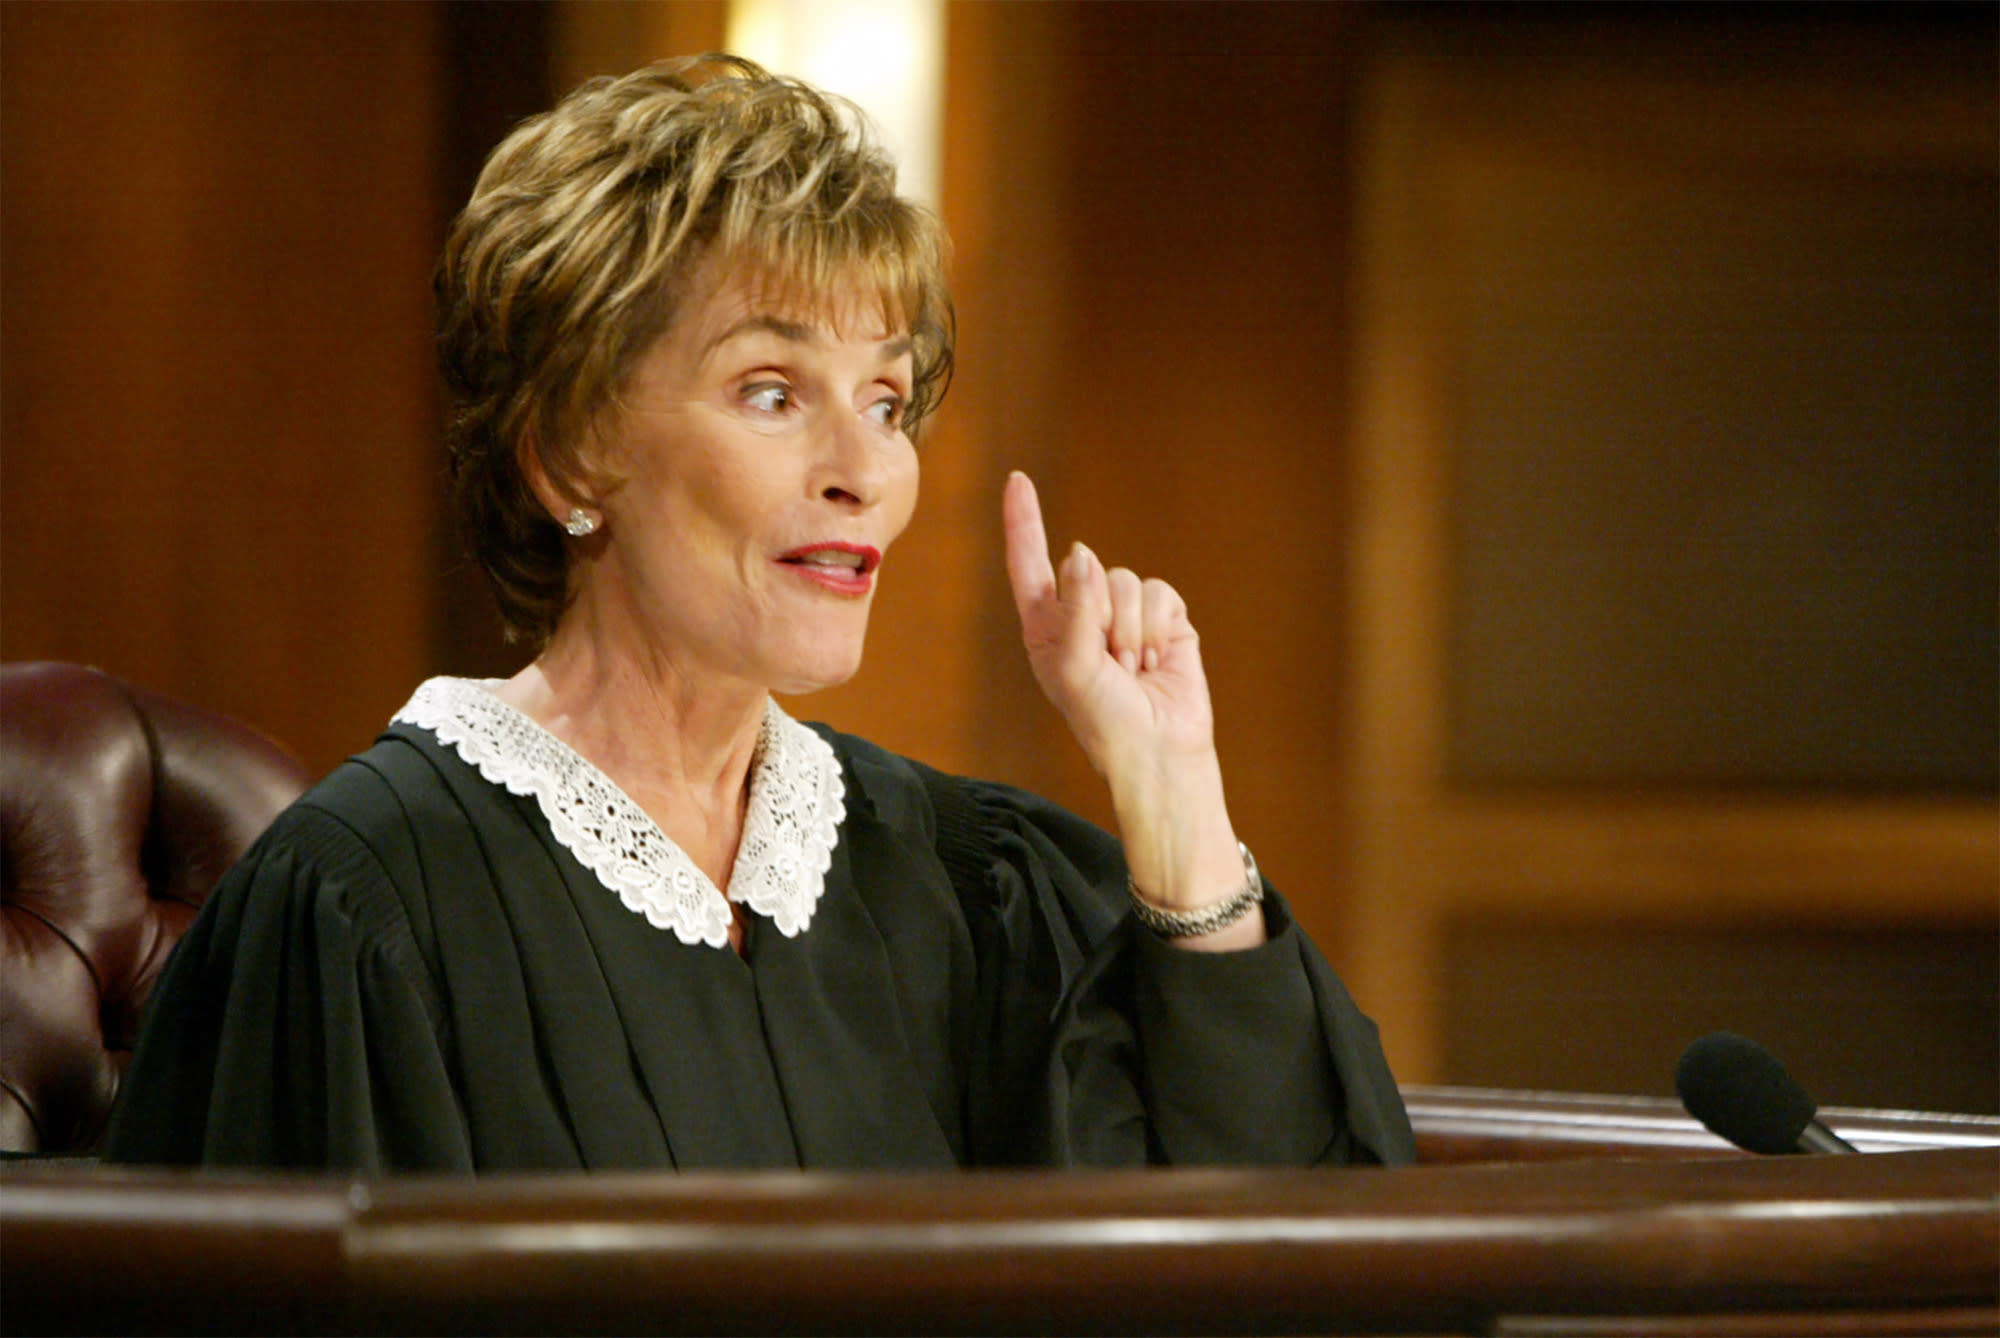 Judge Judy Is the World's HighestPaid TV Host, Raking in 147 Million